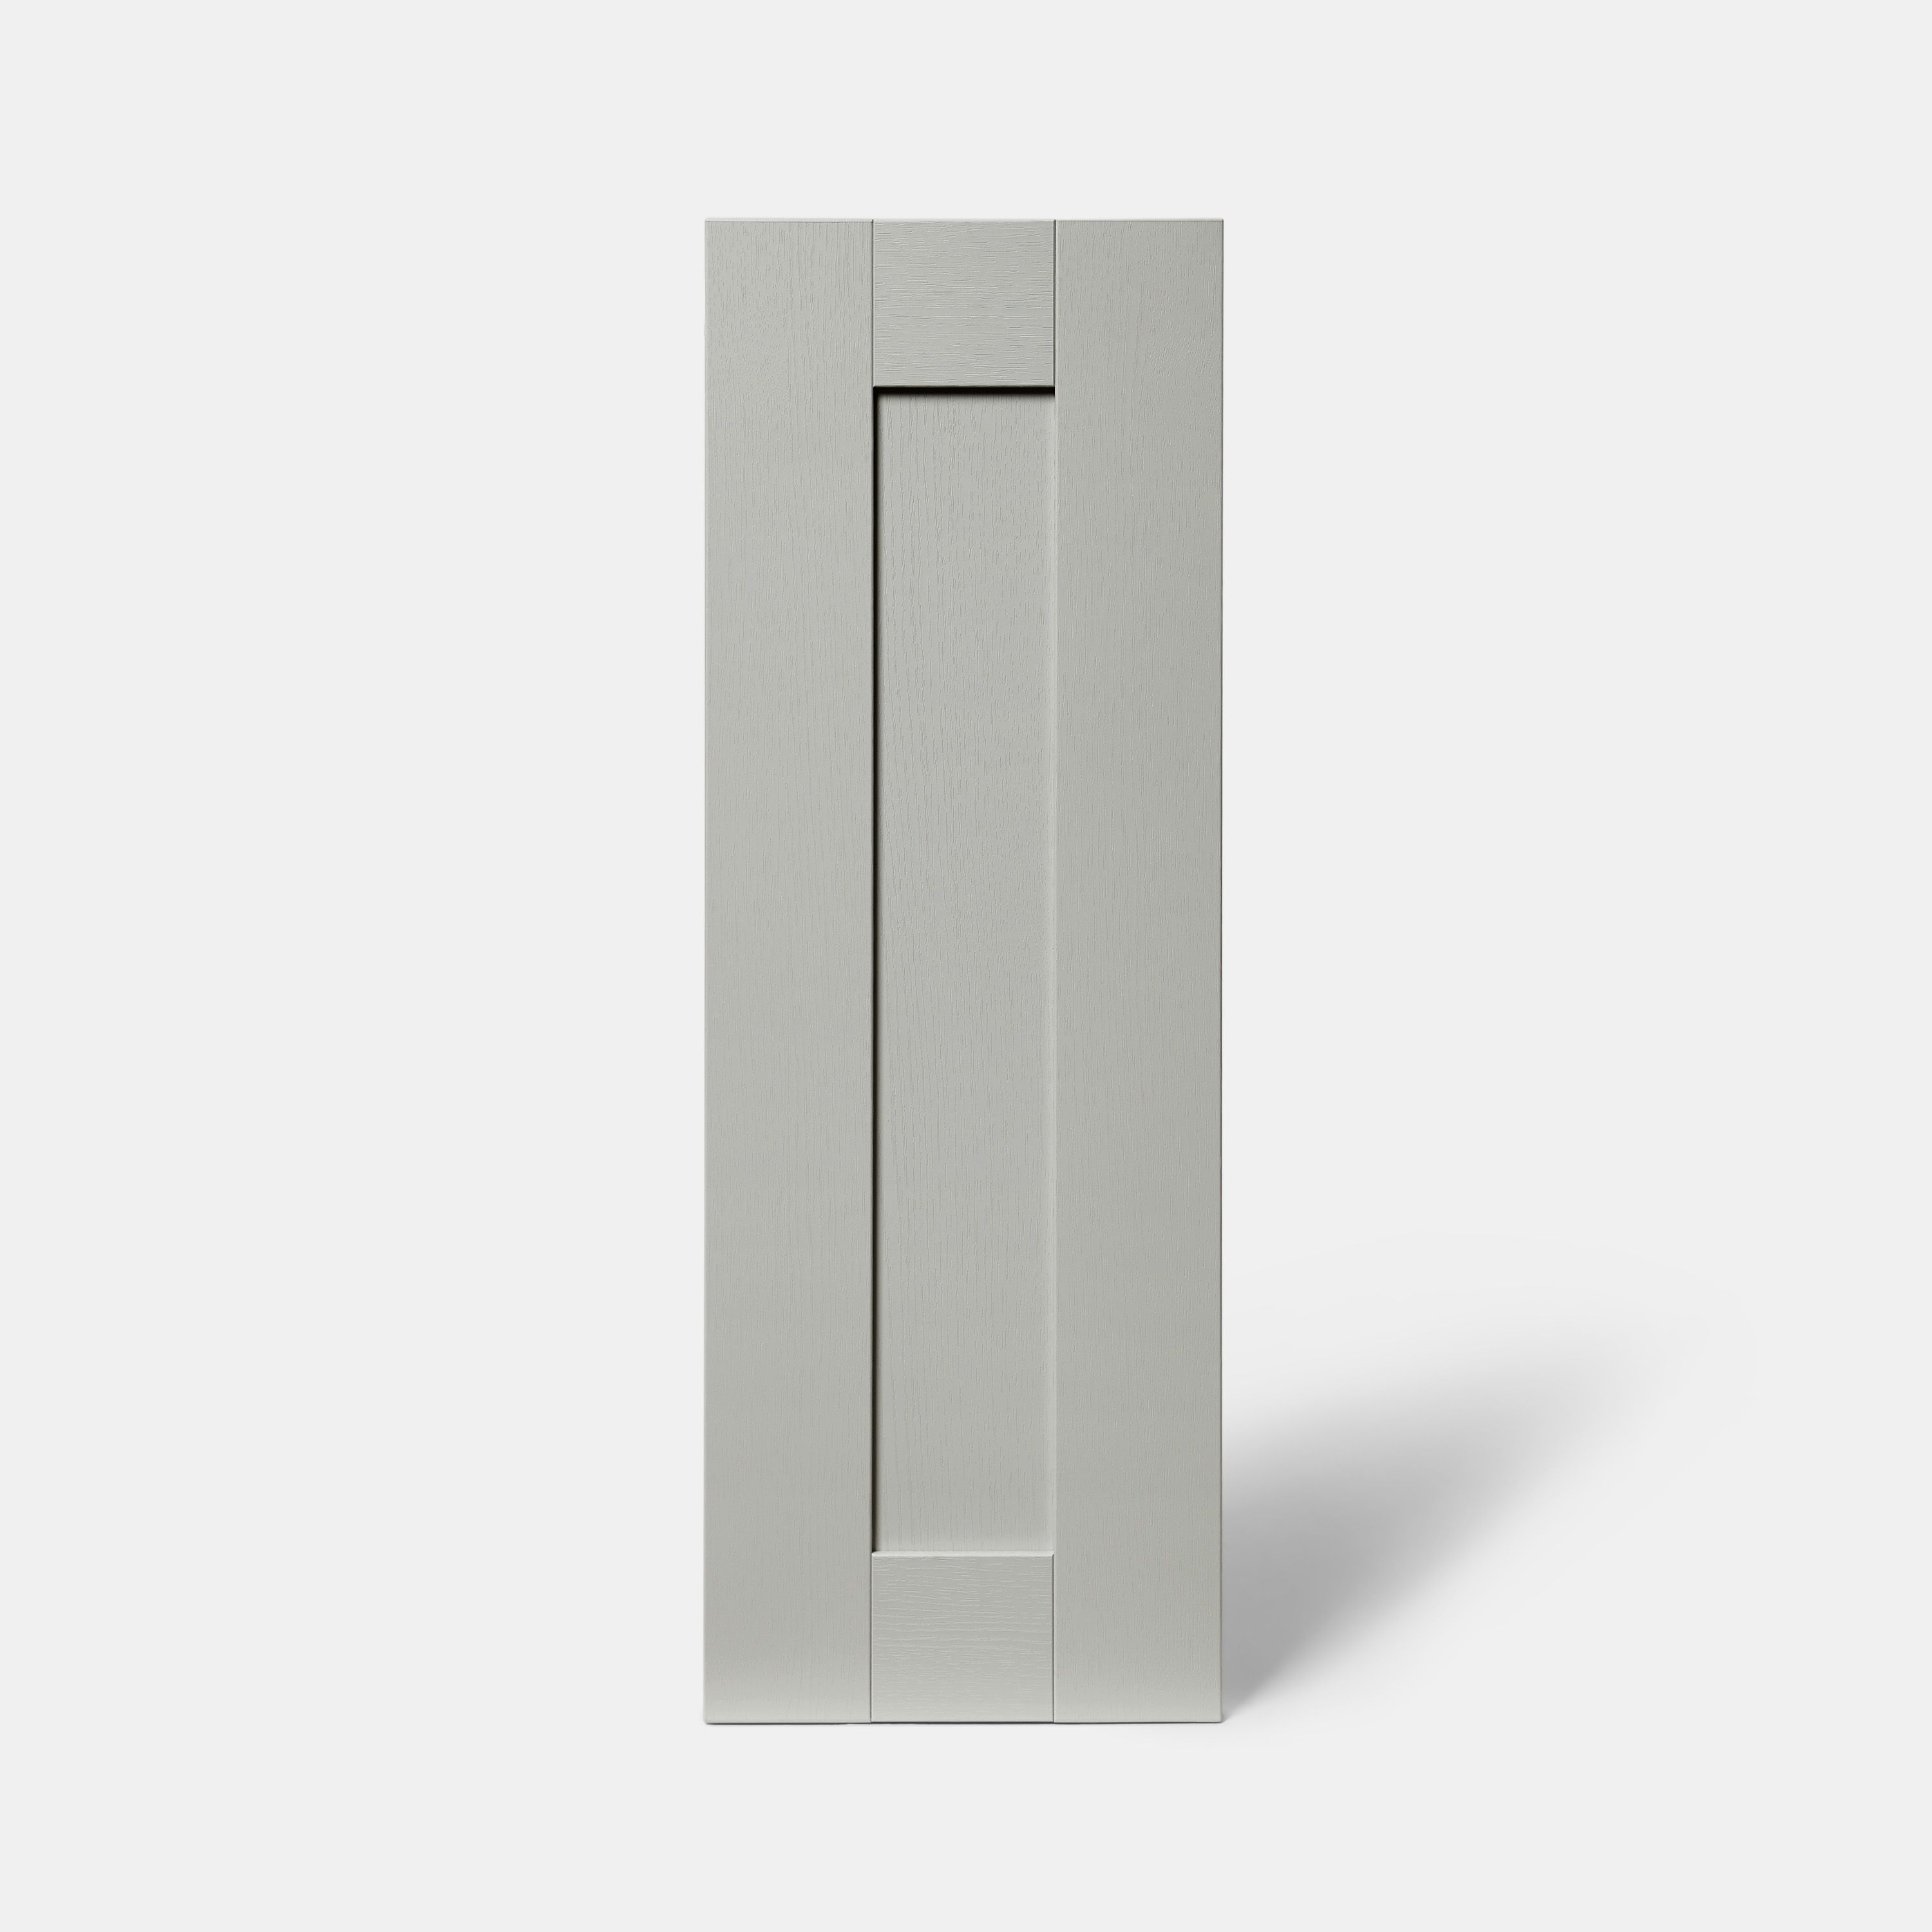 GoodHome Alpinia Matt grey painted wood effect shaker Highline Cabinet door (W)250mm (H)715mm (T)18mm